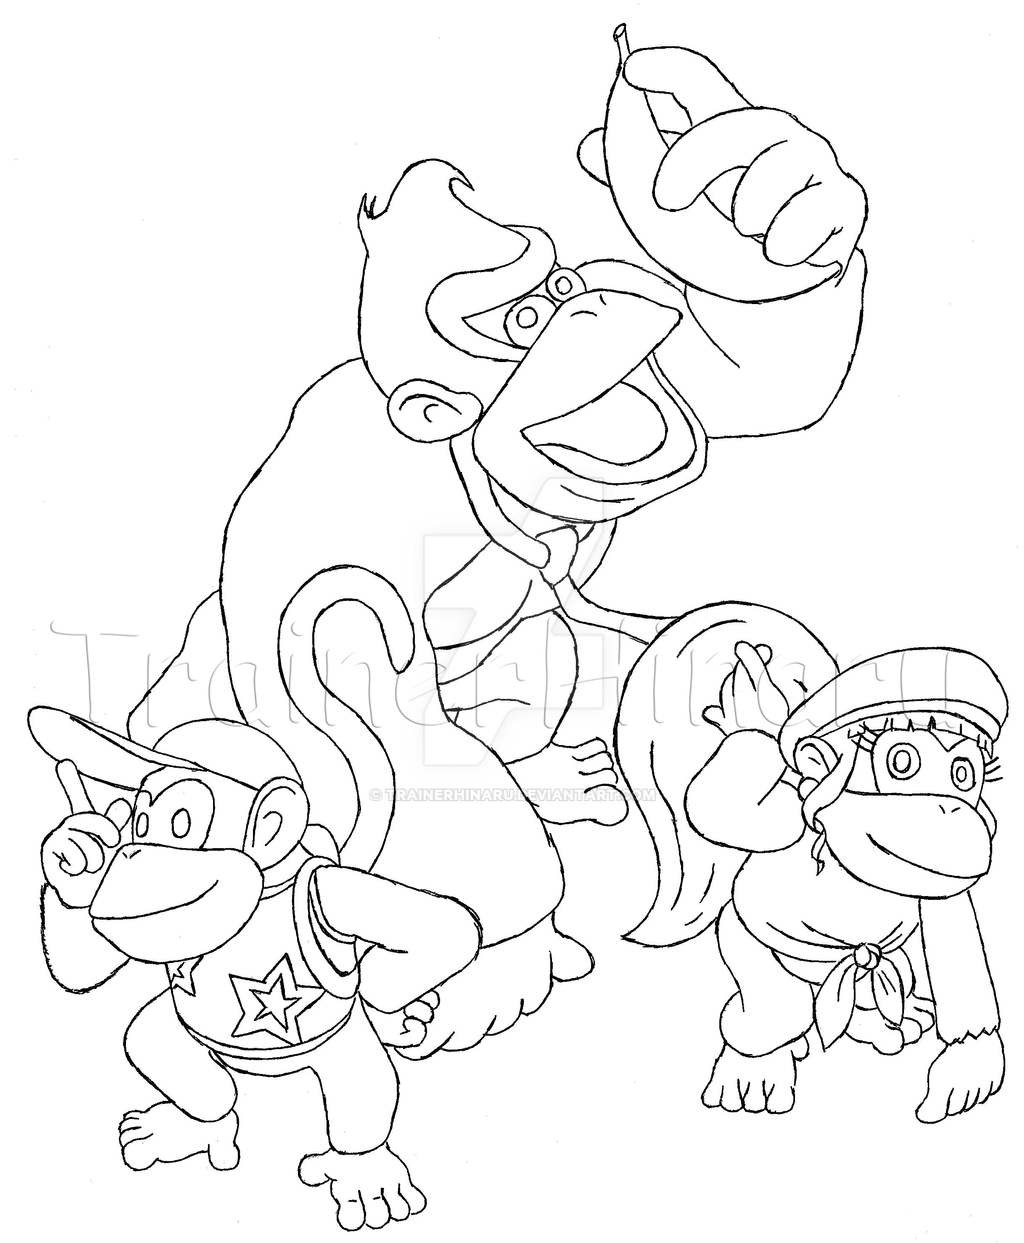 Dixie and Donkey Kong by TrainerHinaru